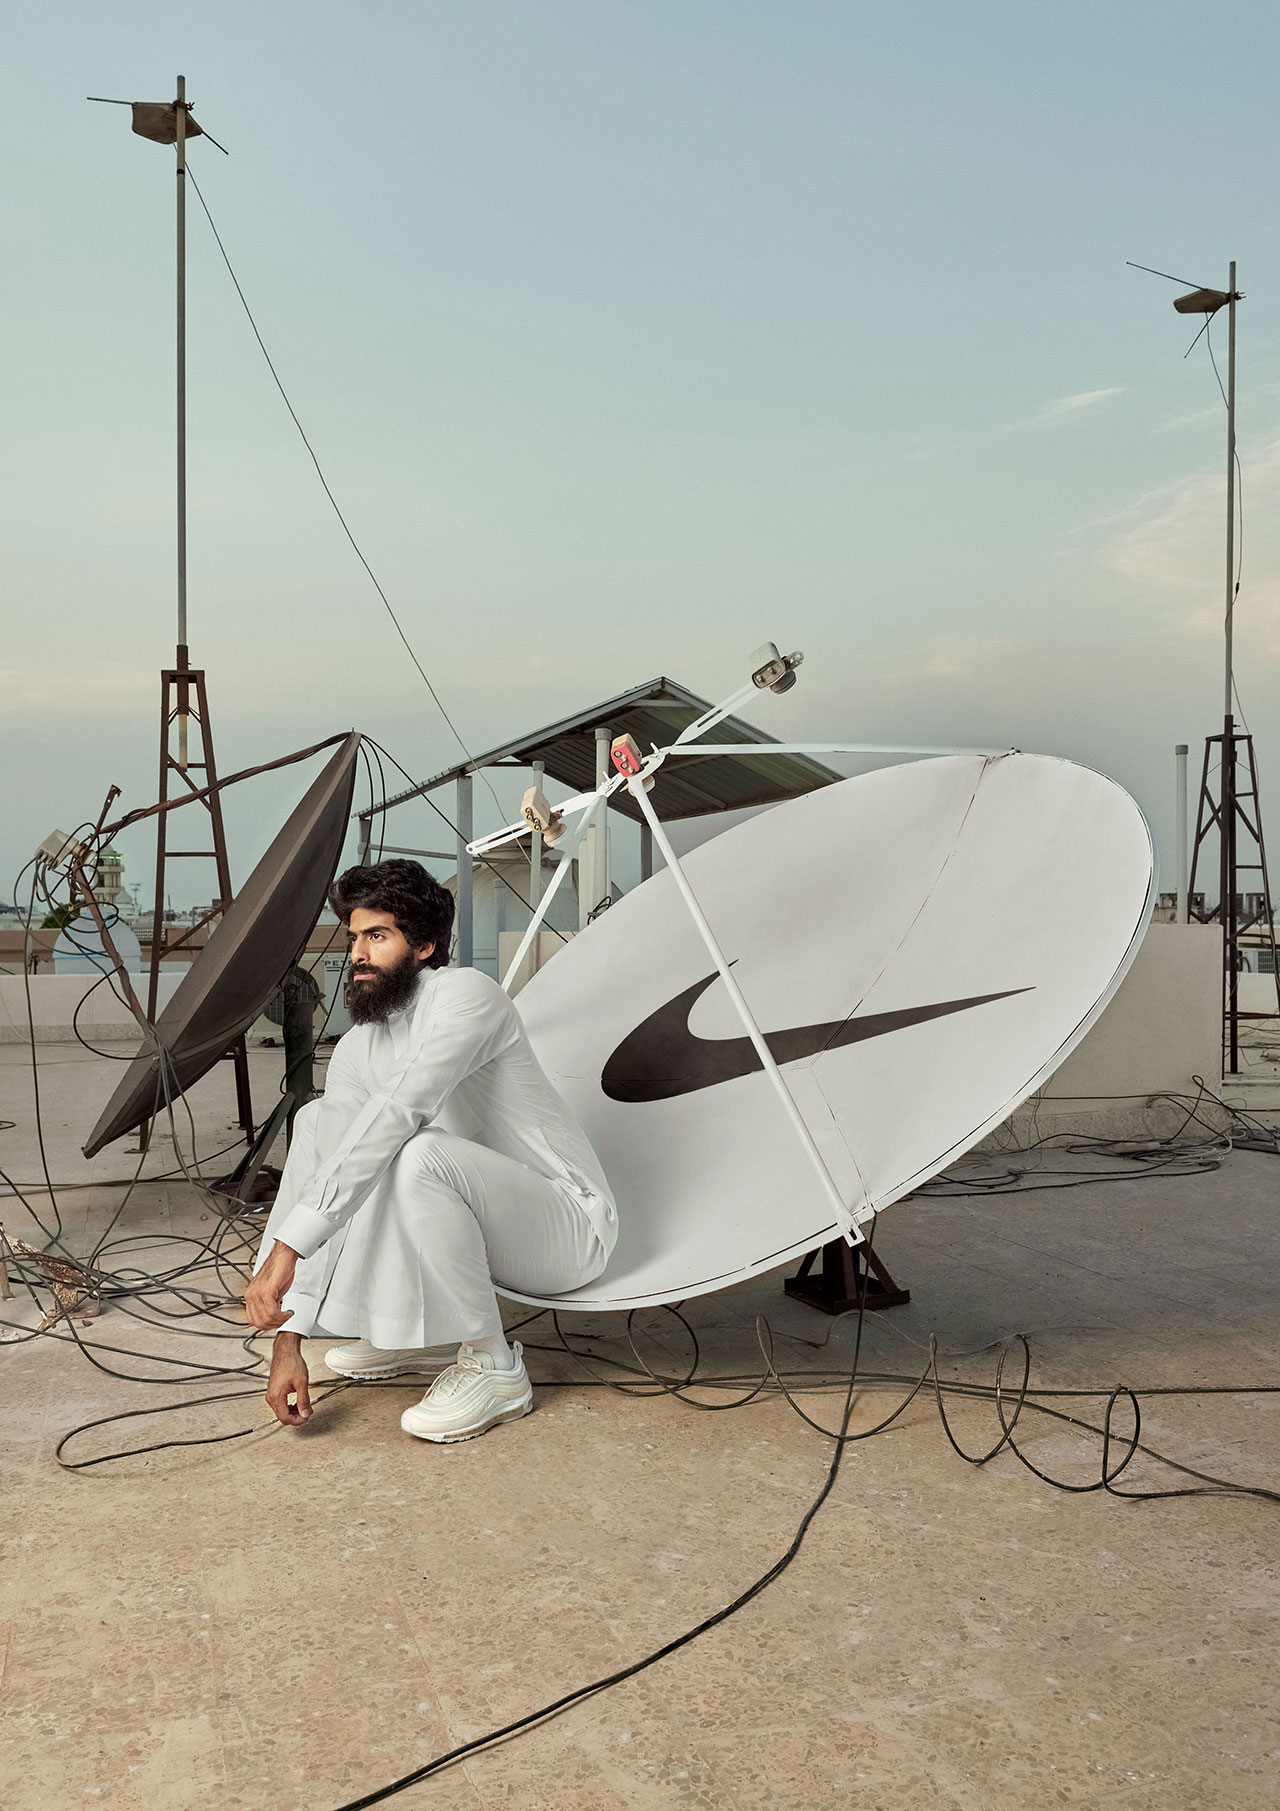 Ali Cha’aban and Rayan Nawawi, Satellite Culture, Nike x Vice magazine featuring Airmax97 model. Courtesy of Ali Cha’aban.